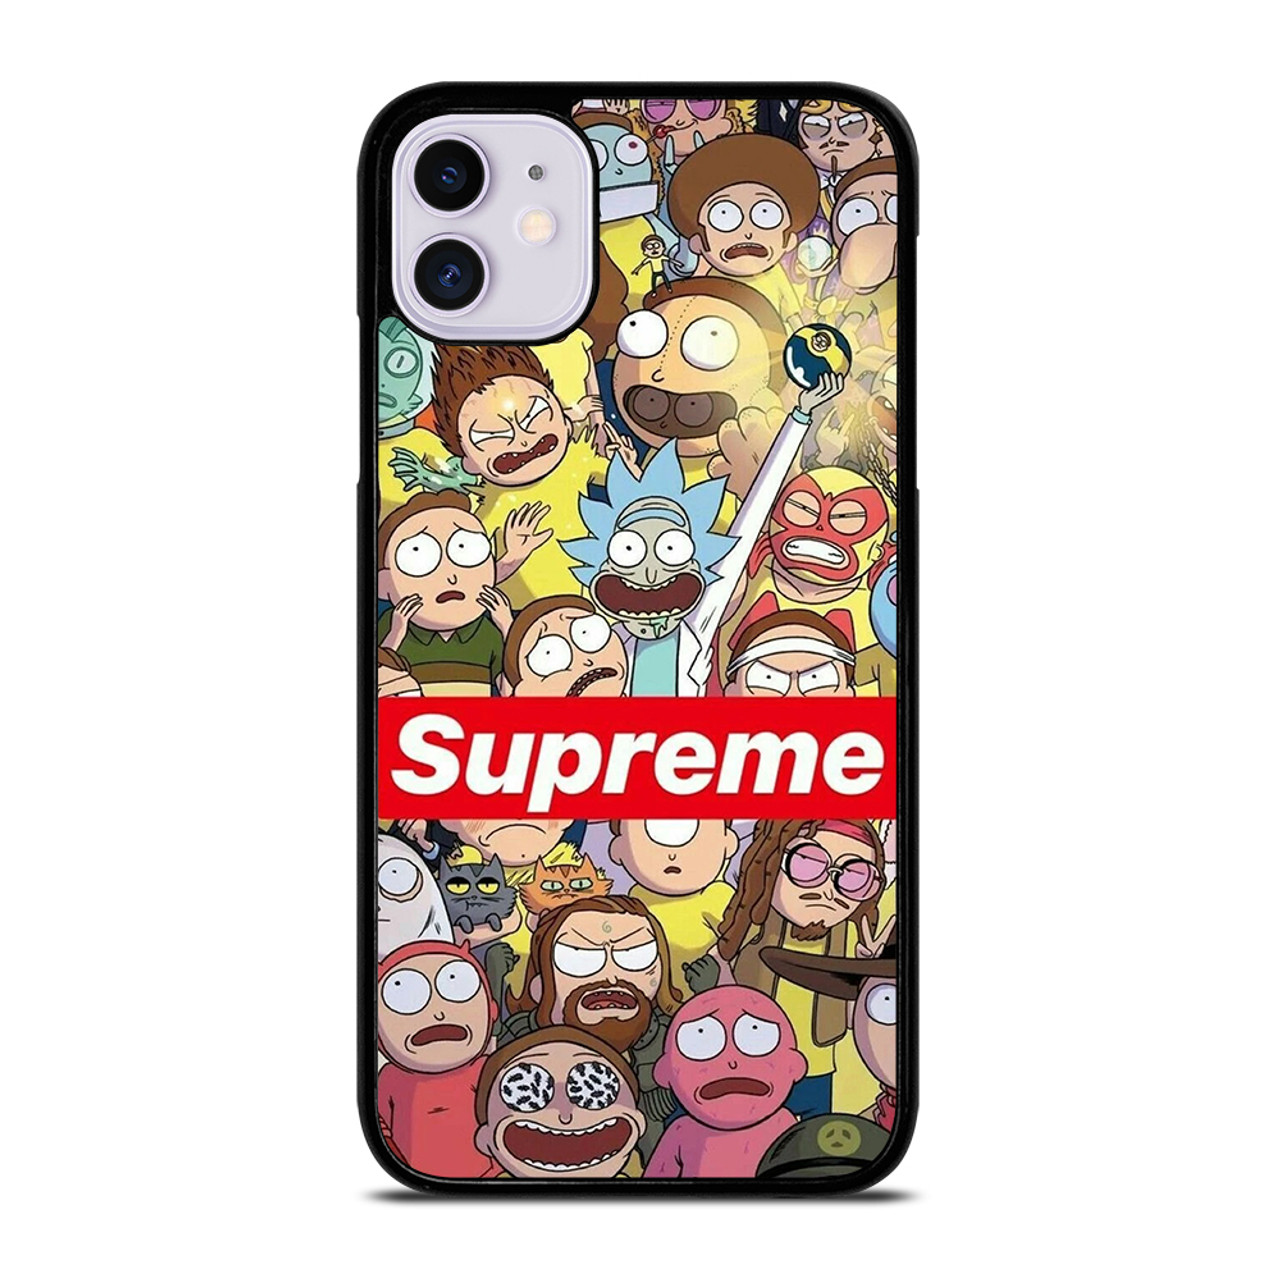 Supreme iPhone 11 Cases